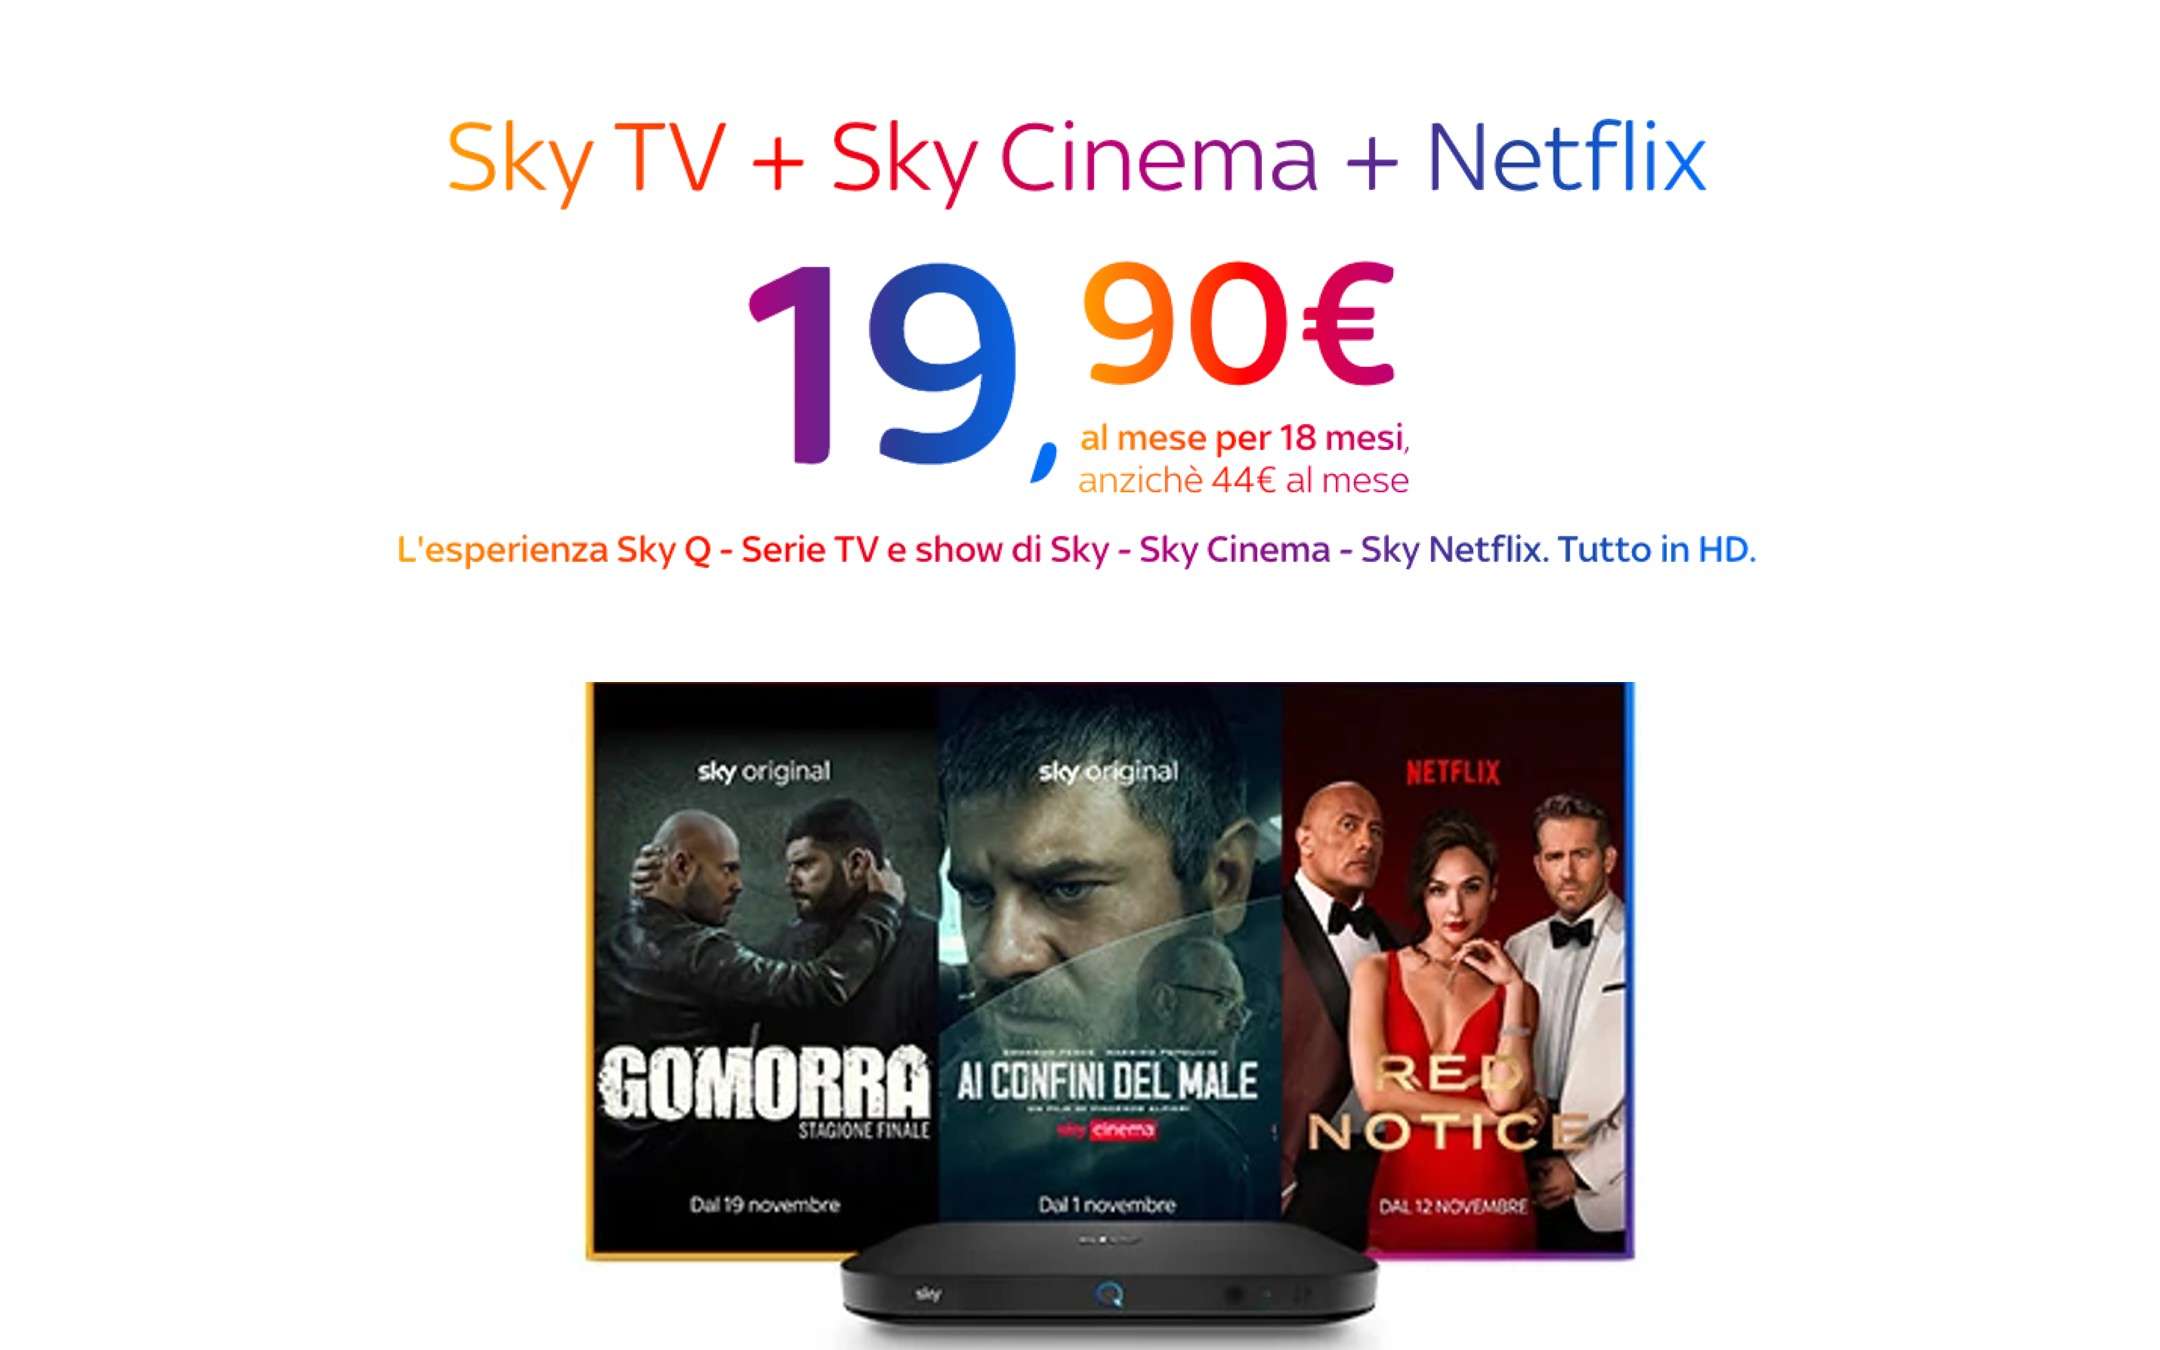 sky-tv-sky-cinema-netflix-in-promo-a-19-90-per-18-mesi